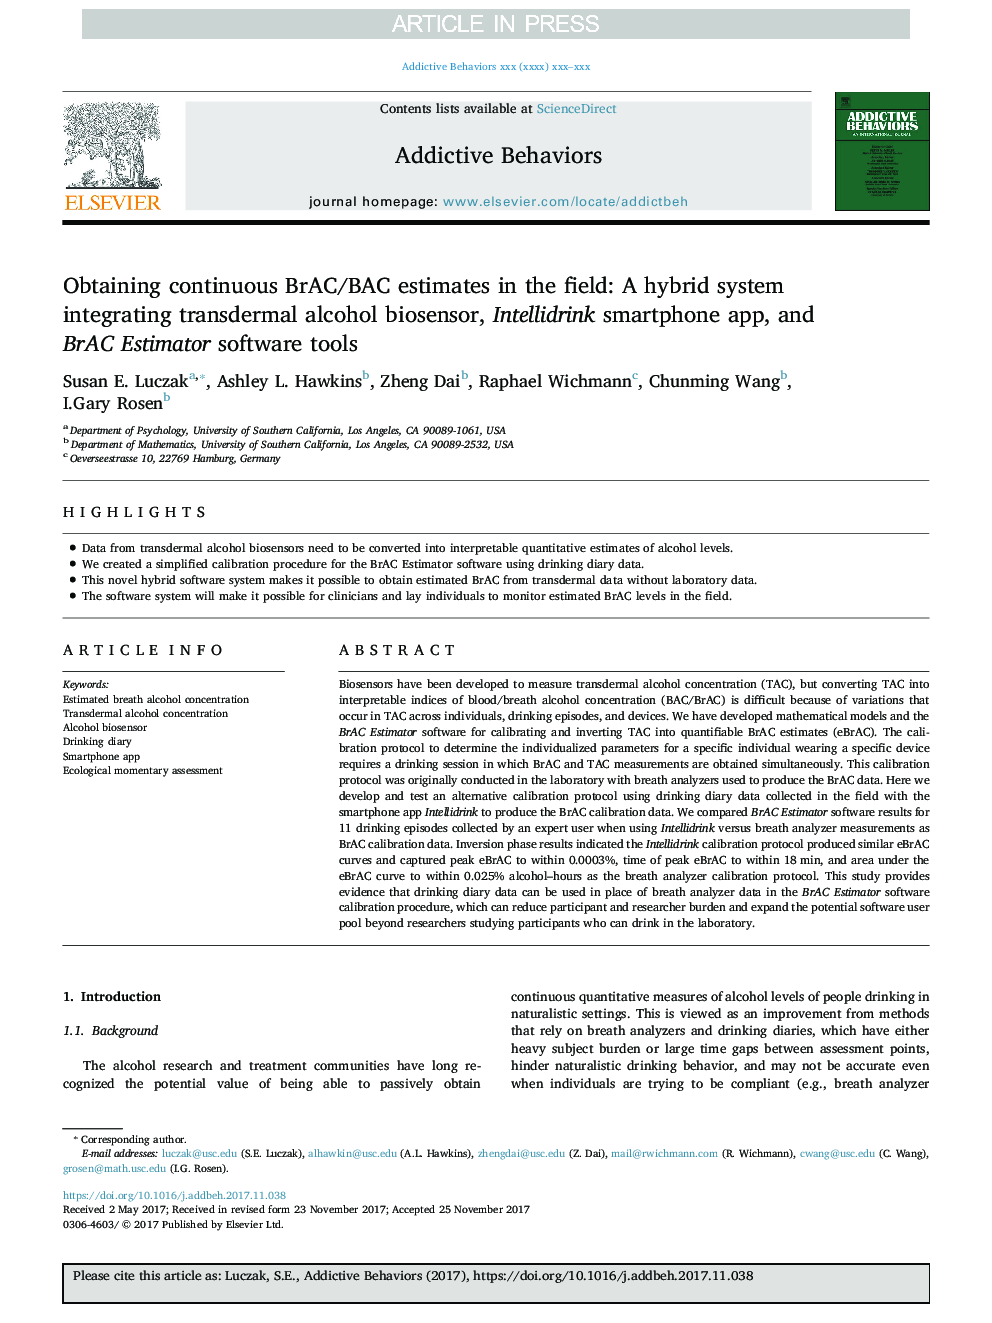 Obtaining continuous BrAC/BAC estimates in the field: A hybrid system integrating transdermal alcohol biosensor, Intellidrink smartphone app, and BrAC Estimator software tools